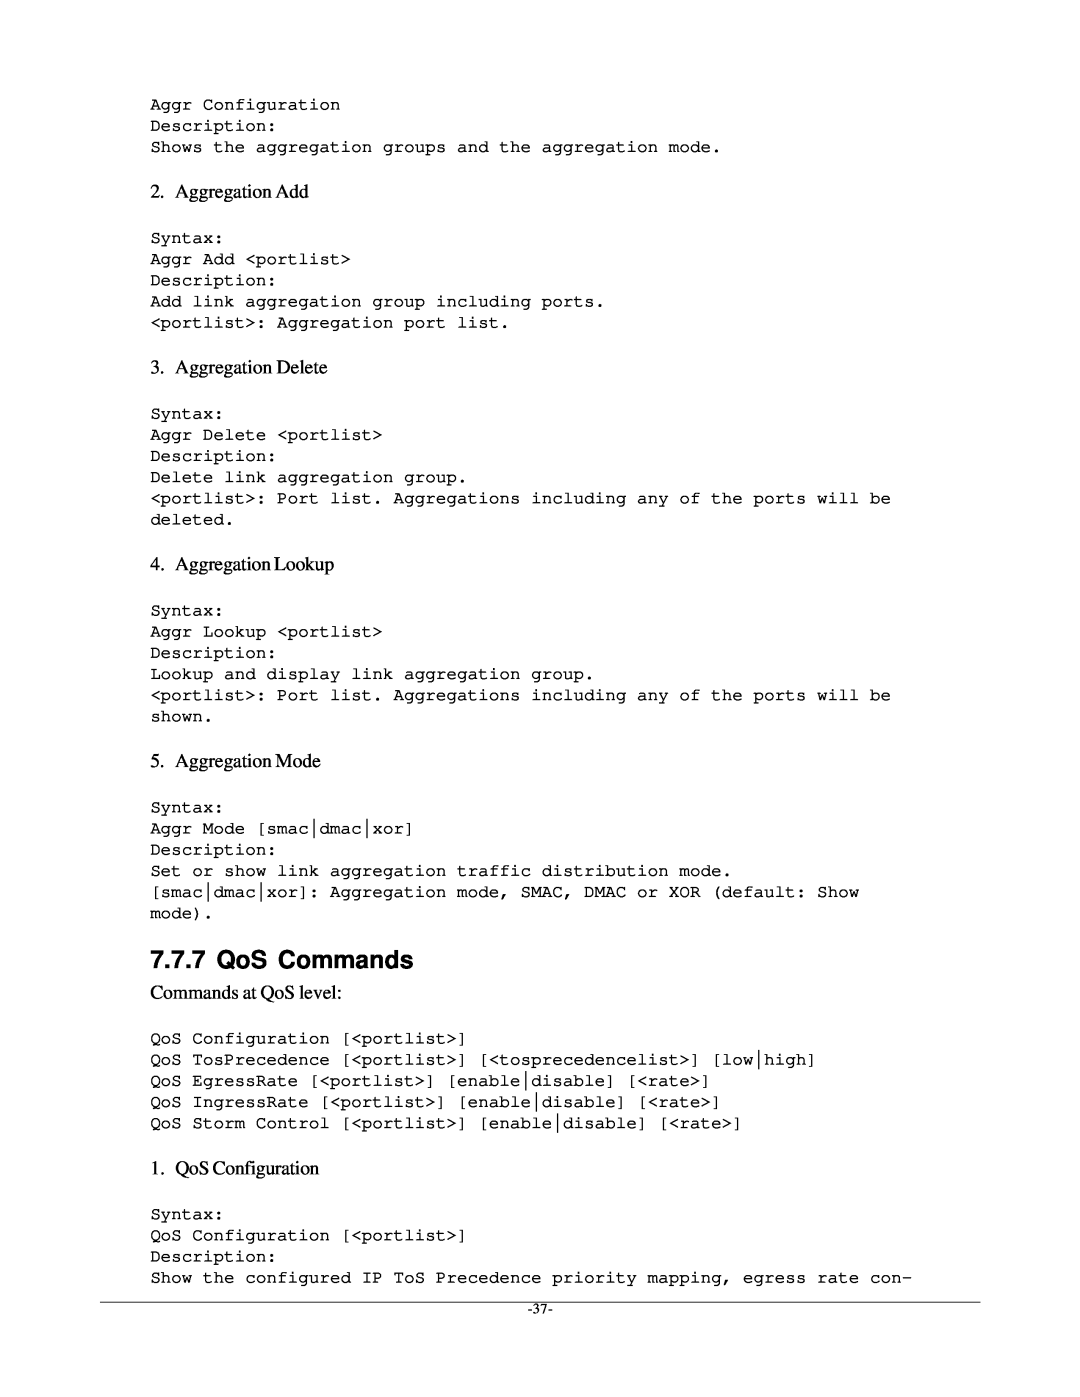 KTI Networks kgs-1601 manual QoS Commands, Aggregation Add, Aggregation Delete, Aggregation Lookup, Aggregation Mode 